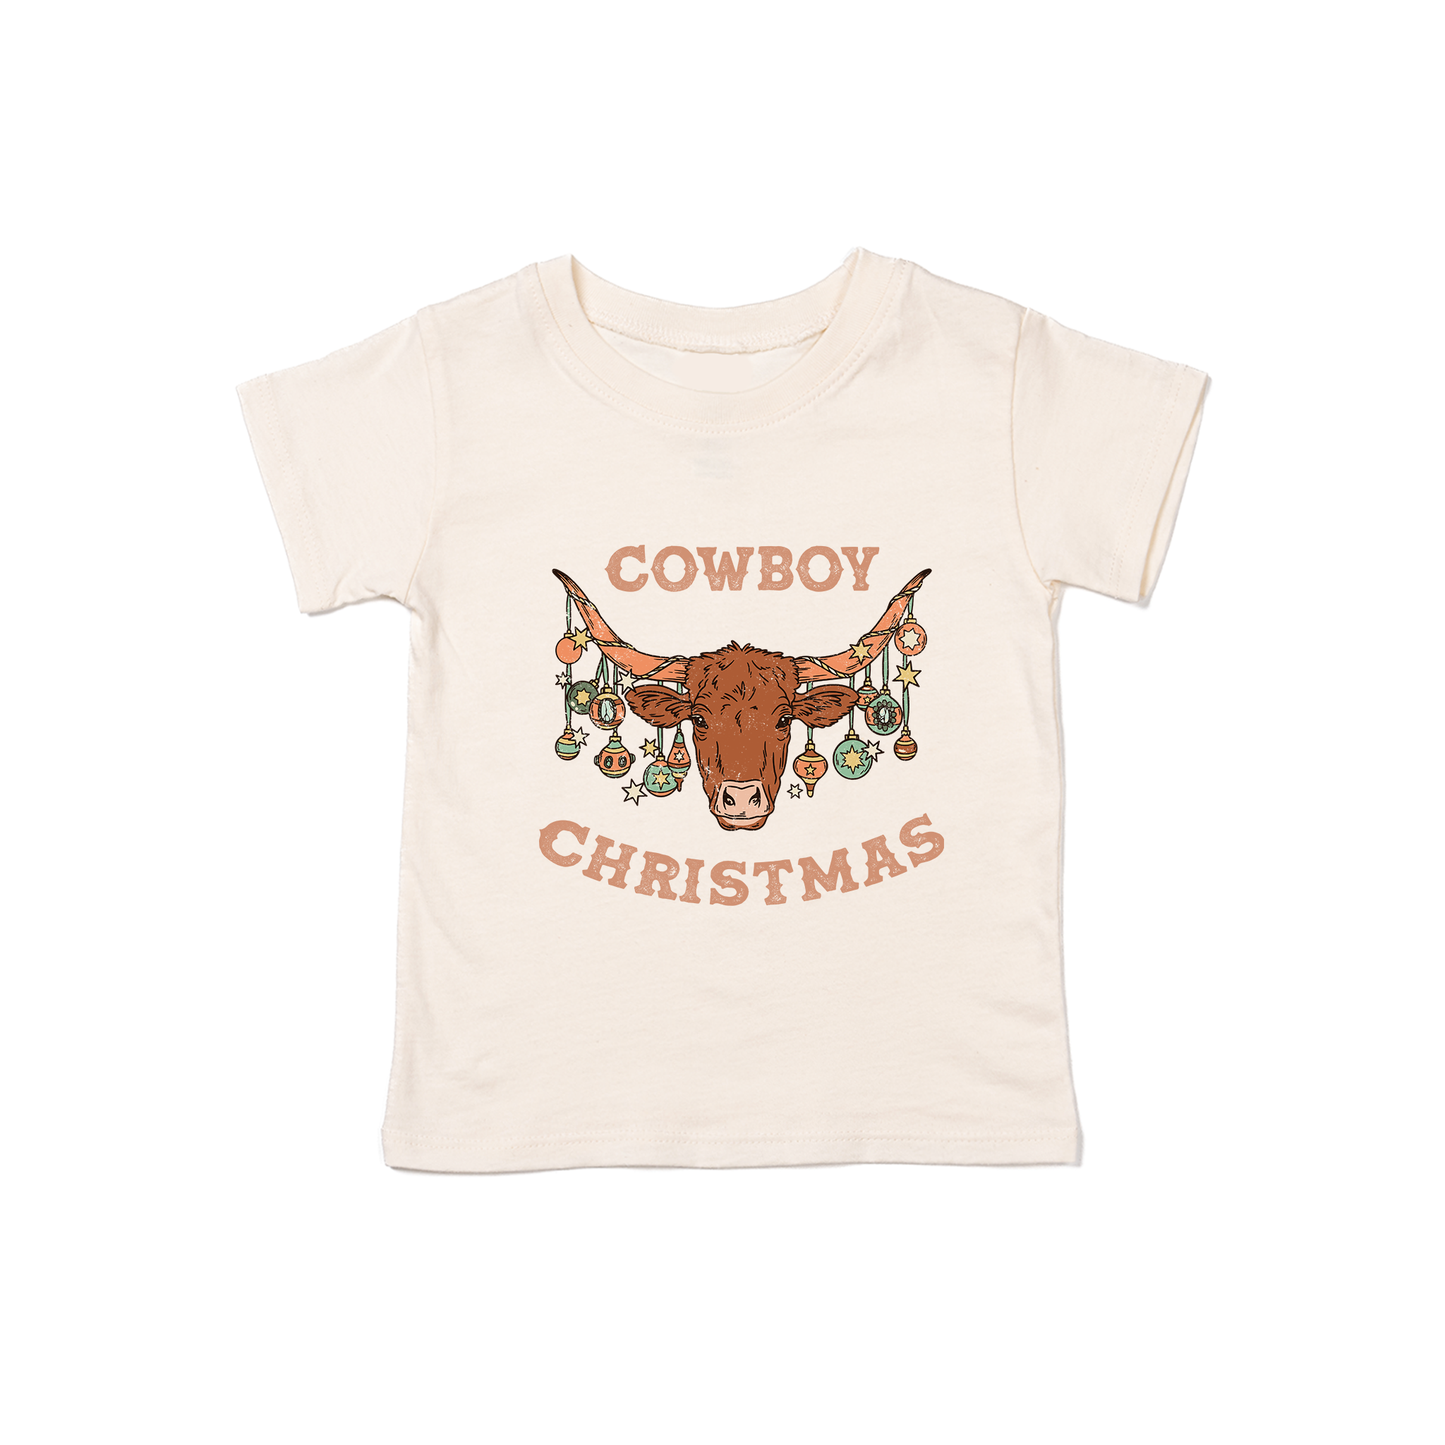 Cowboy Christmas - Kids Tee (Natural)